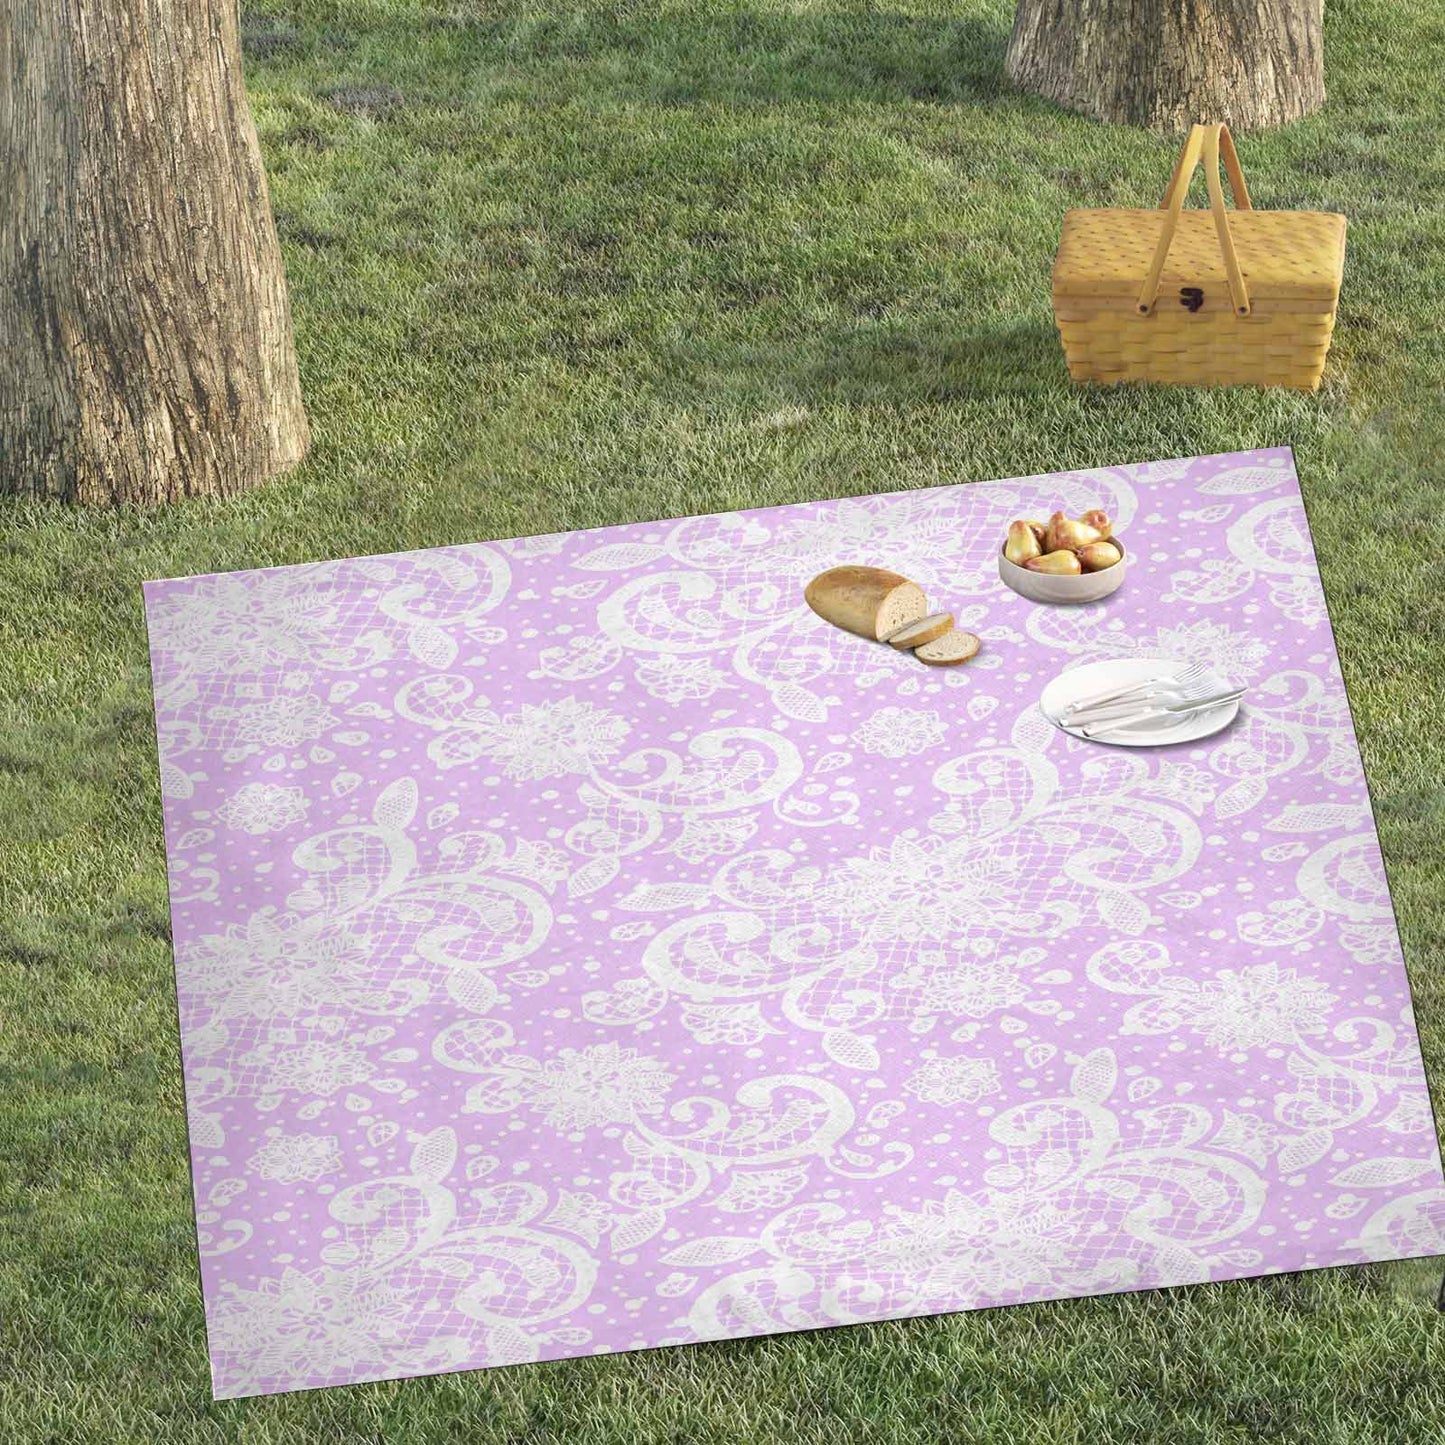 Victorian lace print waterproof picnic mat, 69 x 55in, design 06